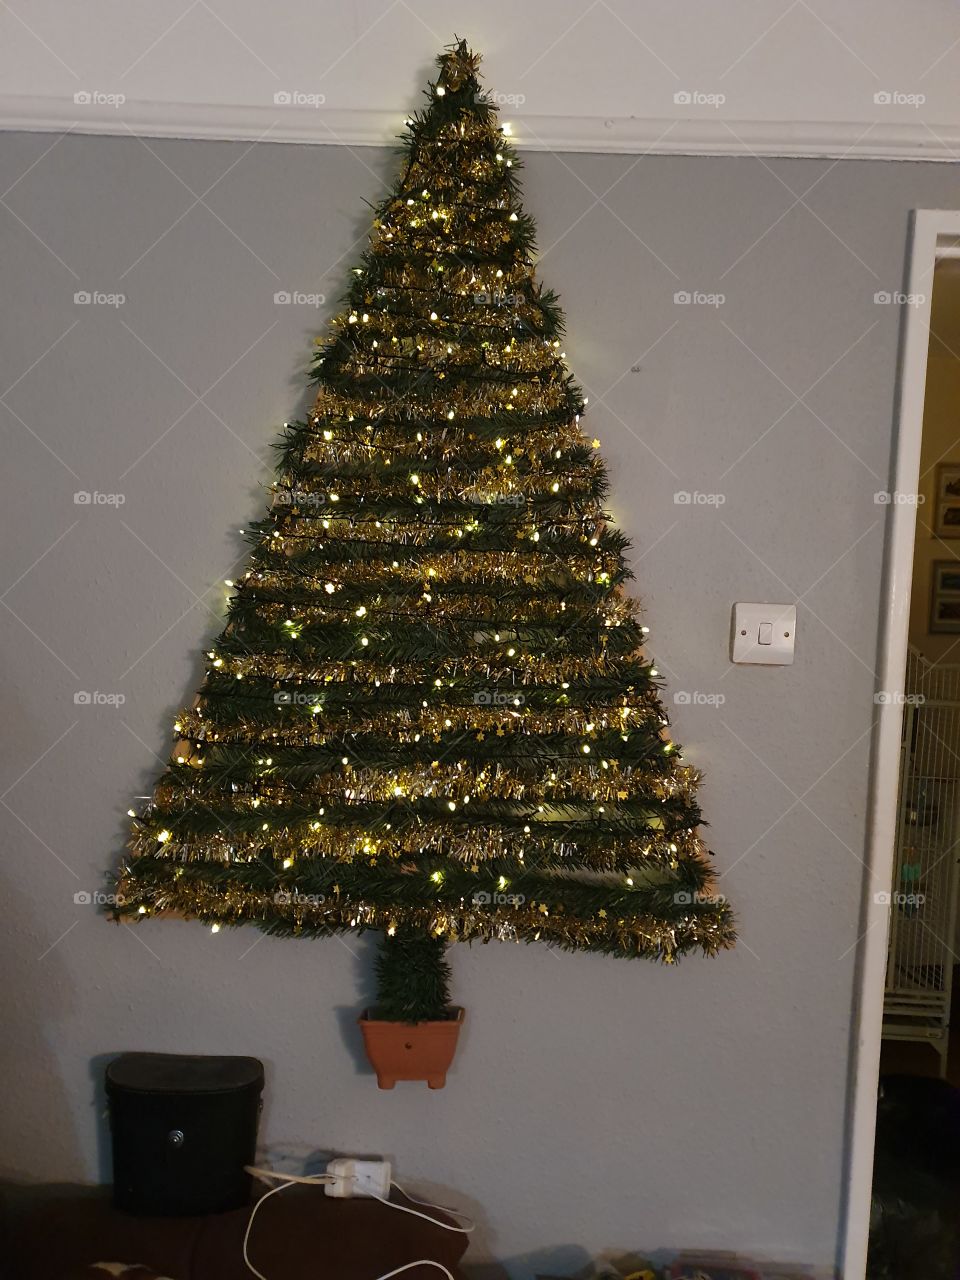 Our home made Wall Christmas Tree.